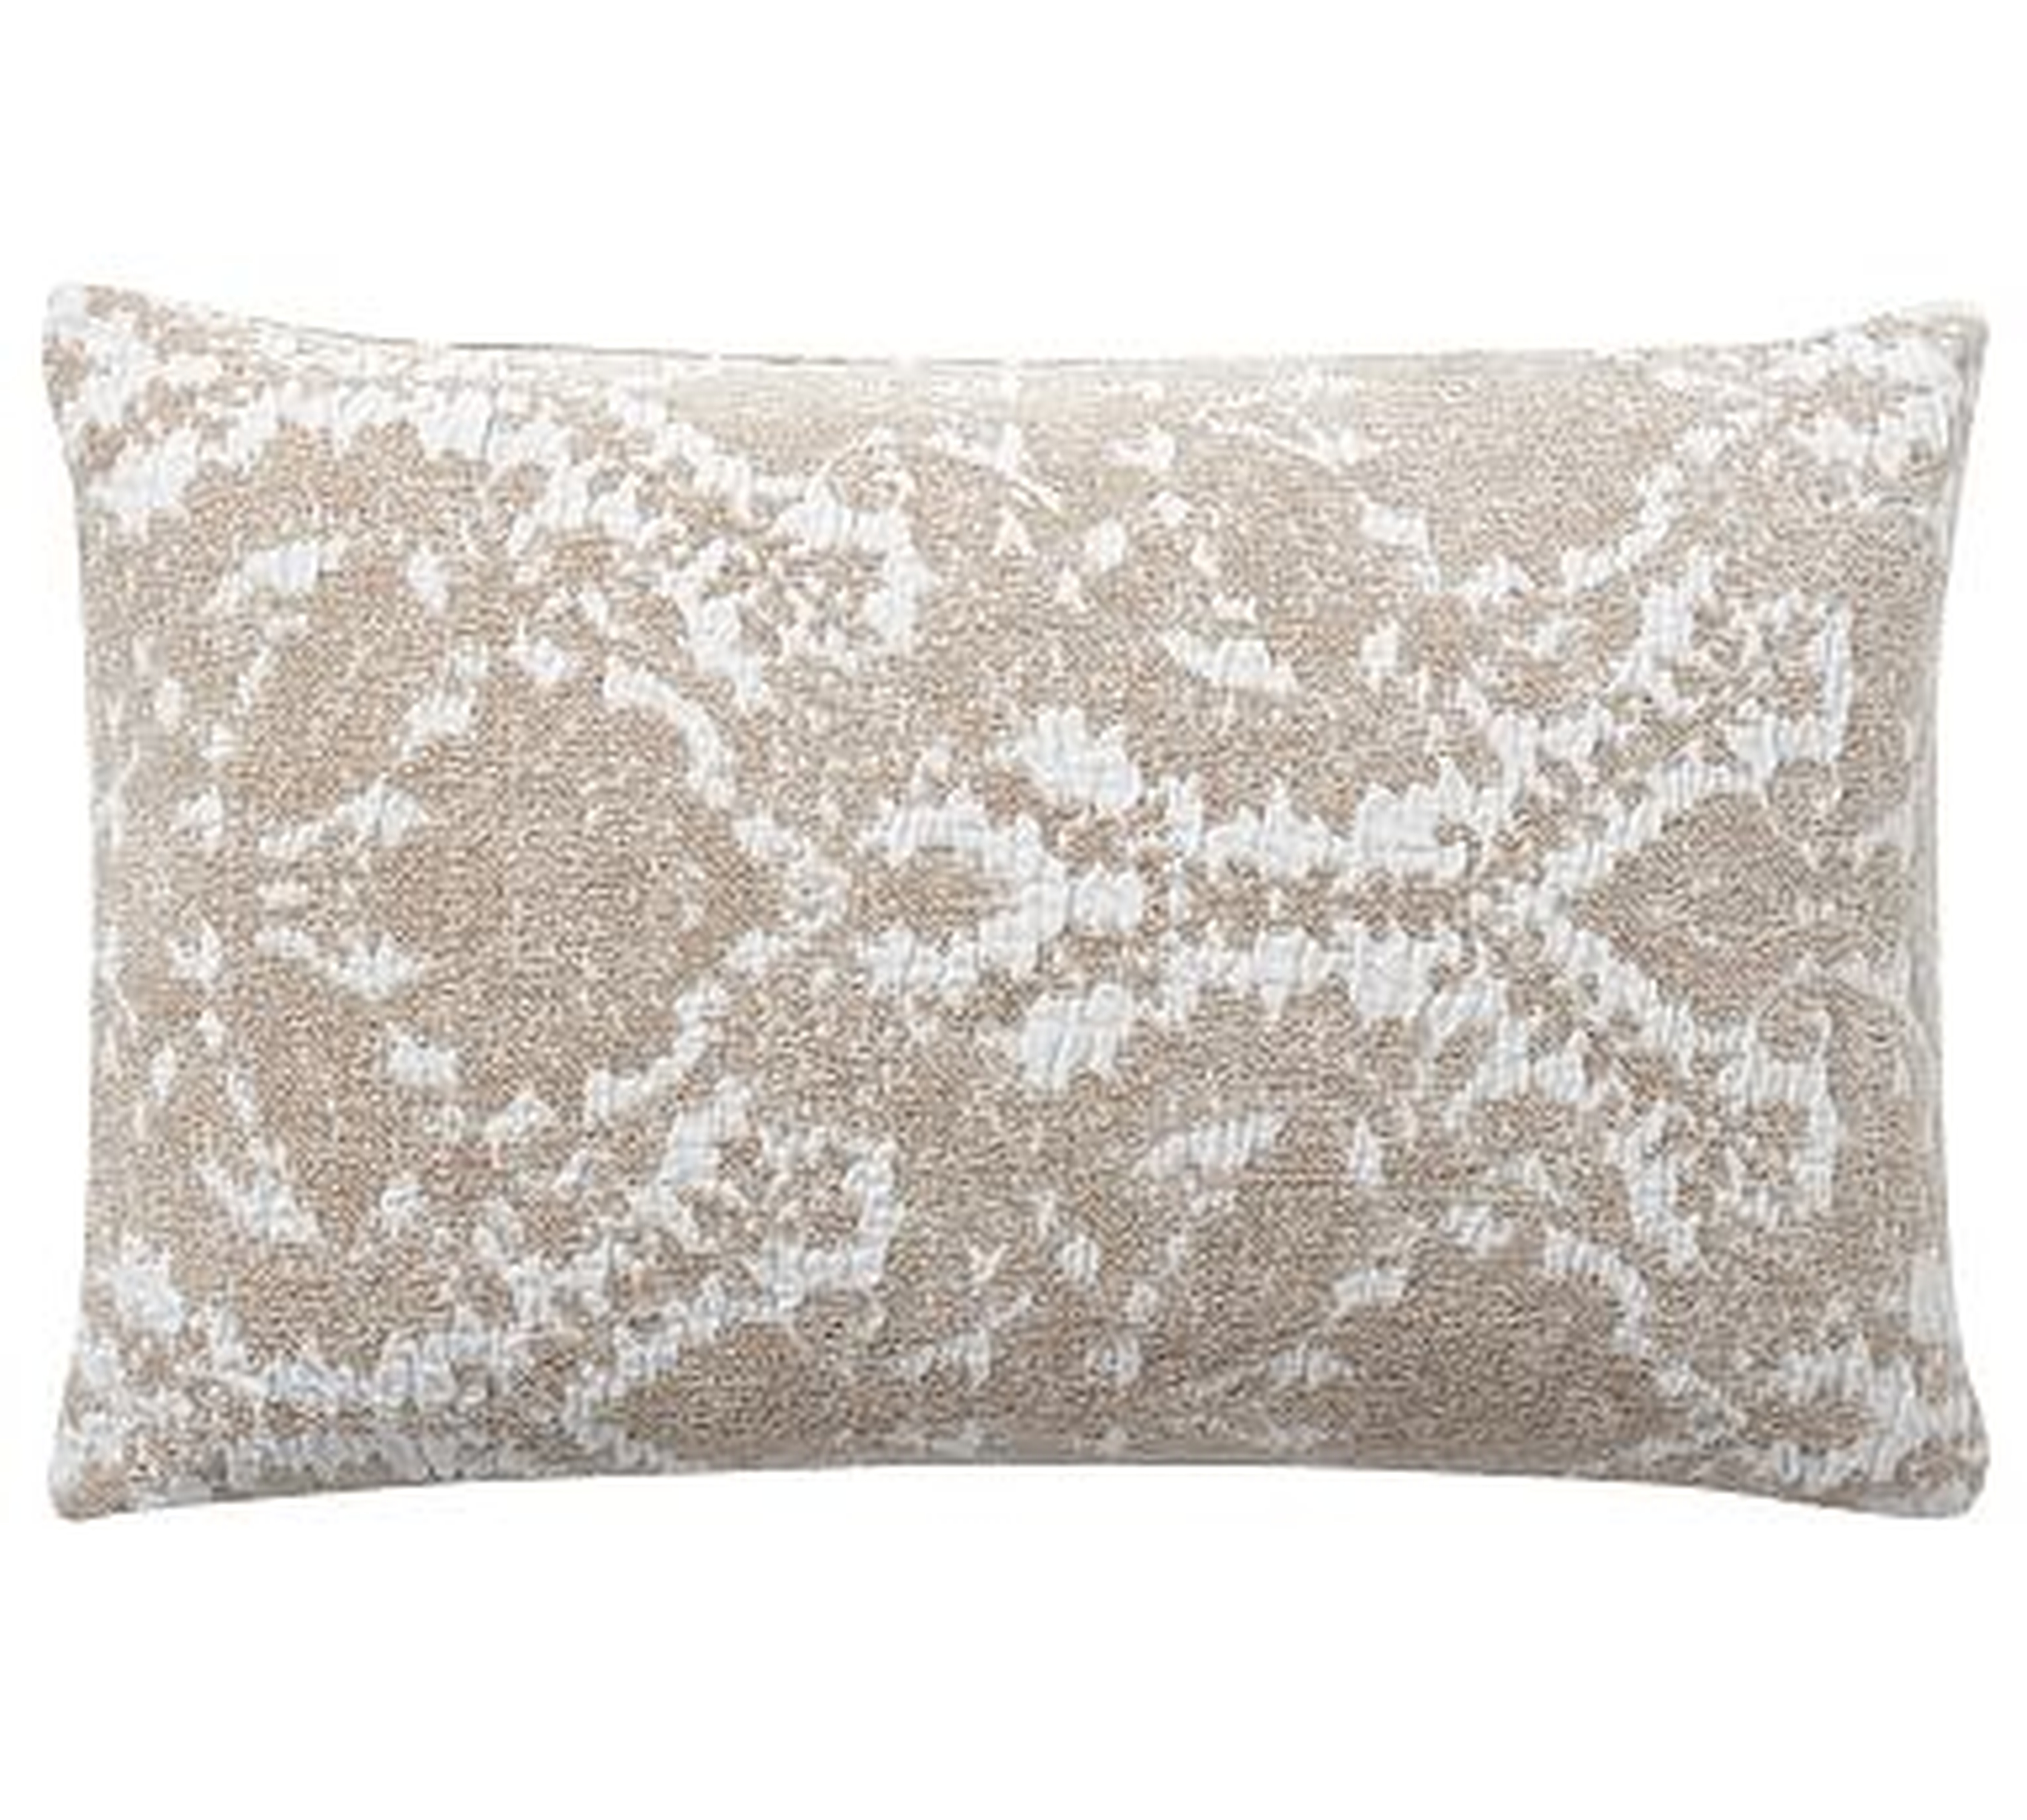 Rosalia Textured Lumbar Pillow Cover, 16 x 26", Flax - Pottery Barn